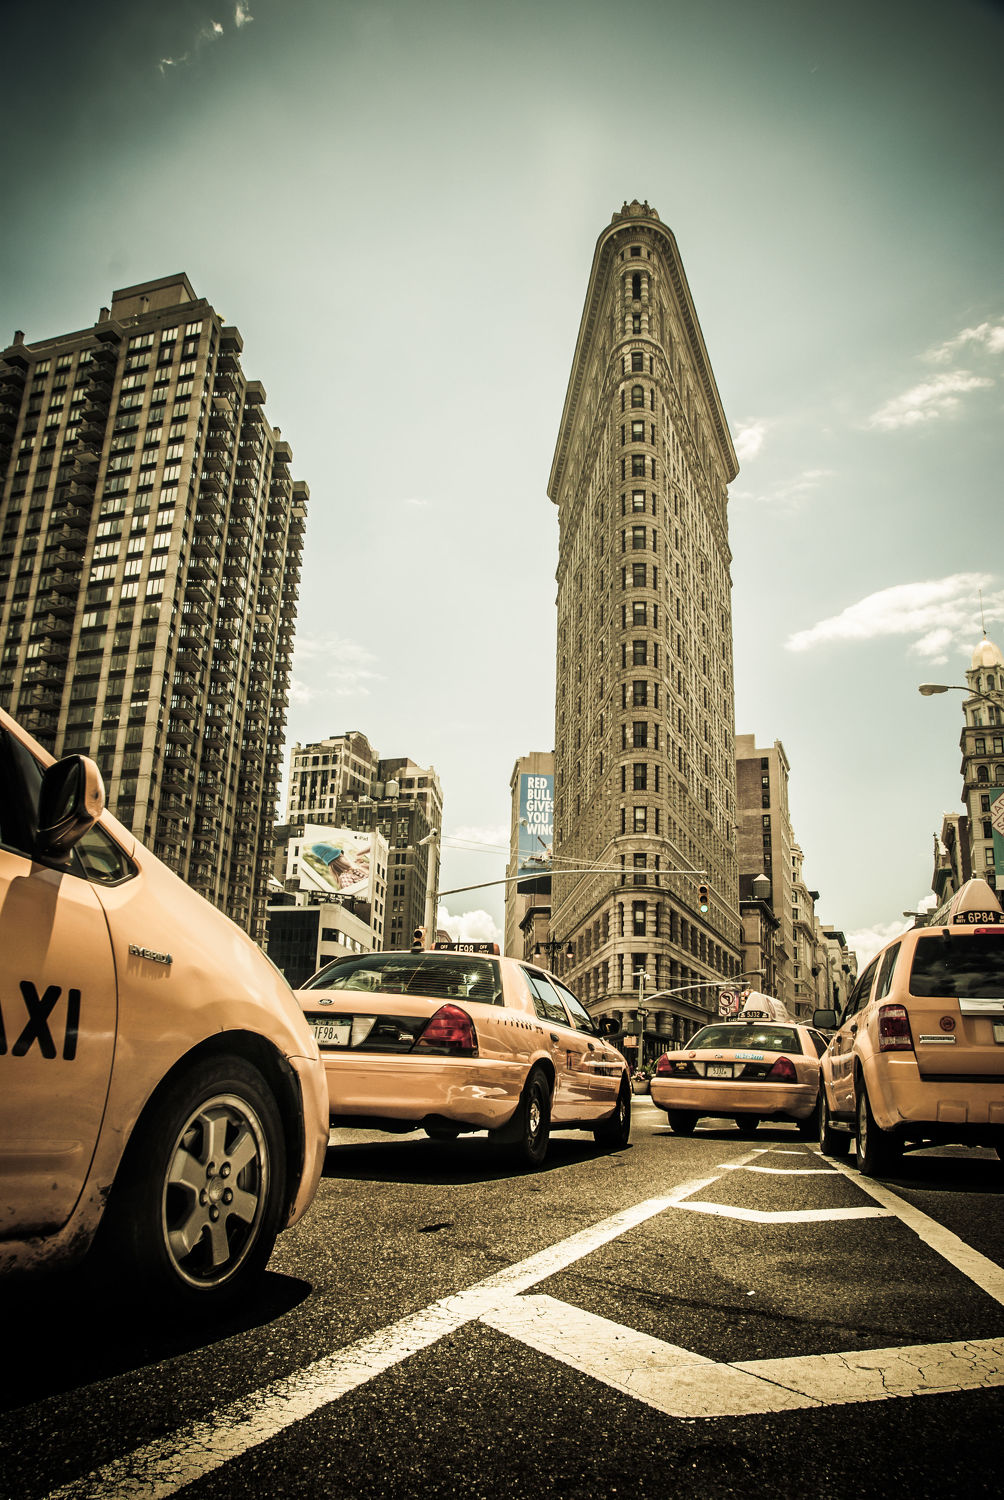 Bild mit Architektur, Gebäude, Stadt, urban, New York, USA, street, Manhattan, taxi, New York City, NYC, Gelbe Taxis, yellow cabs, Grossstadt, high tower, cabs, cab, gelbes taxi, flat iron building